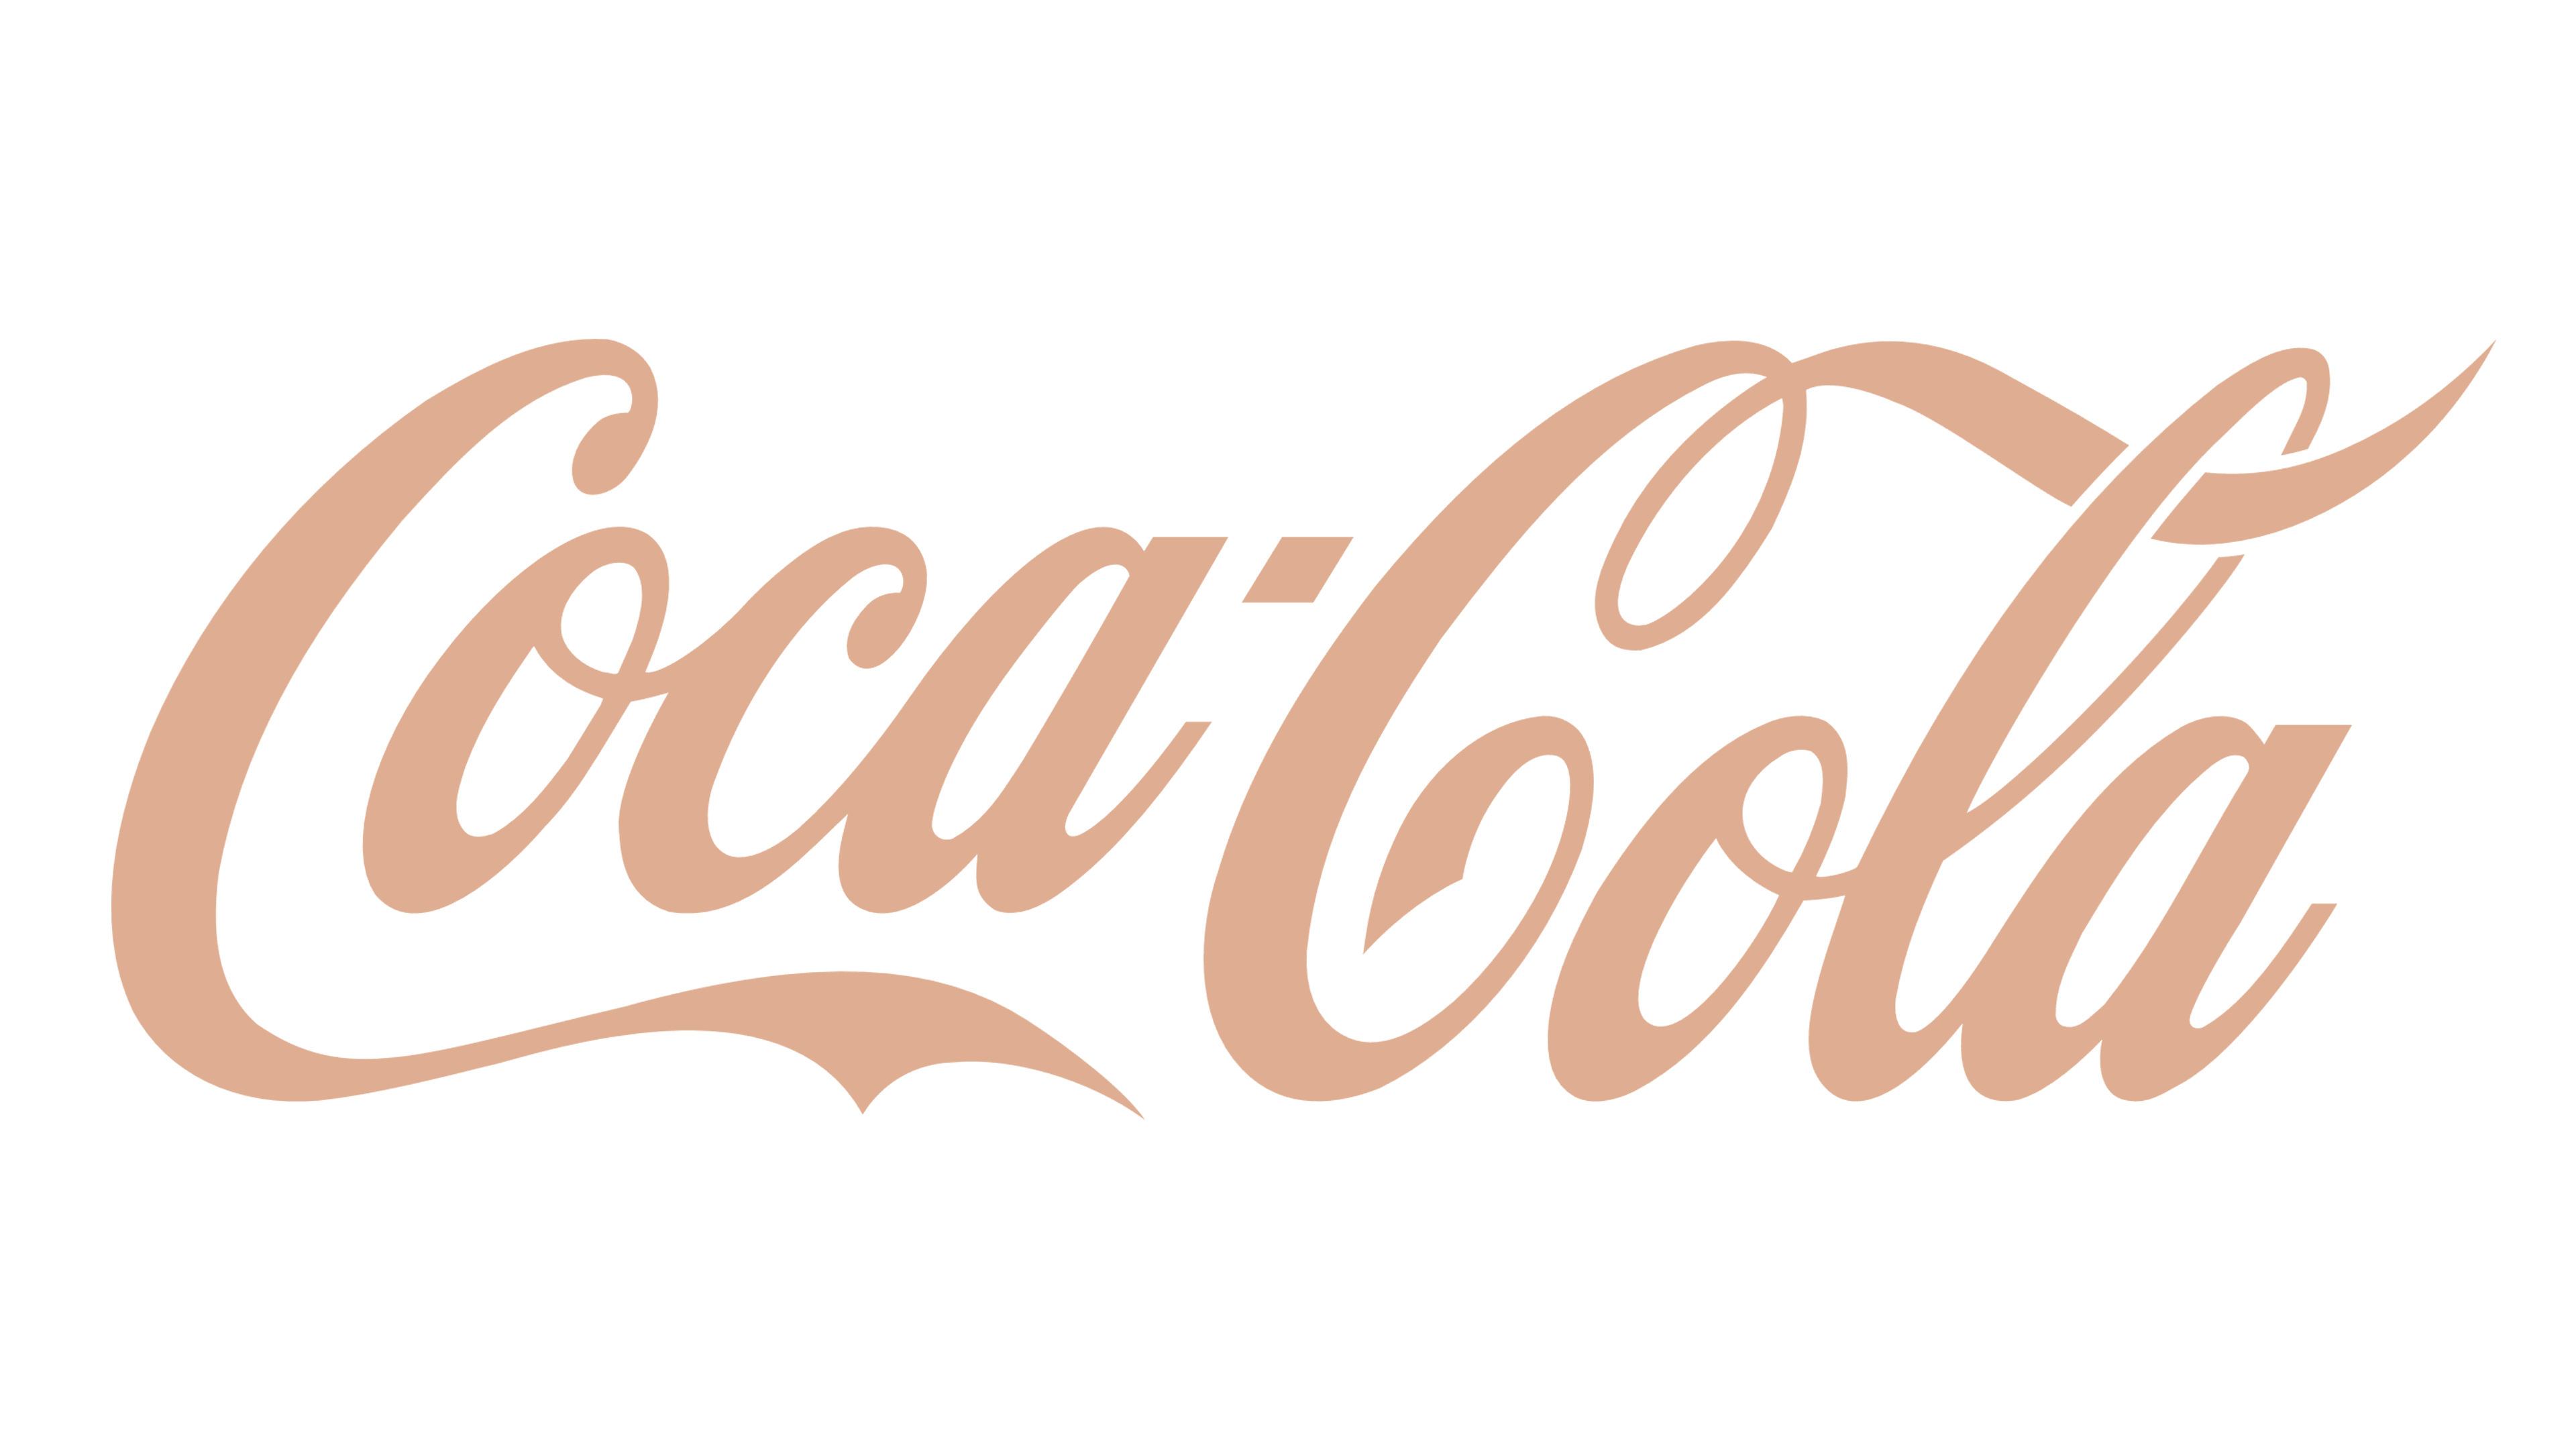 Coca Cola logo3